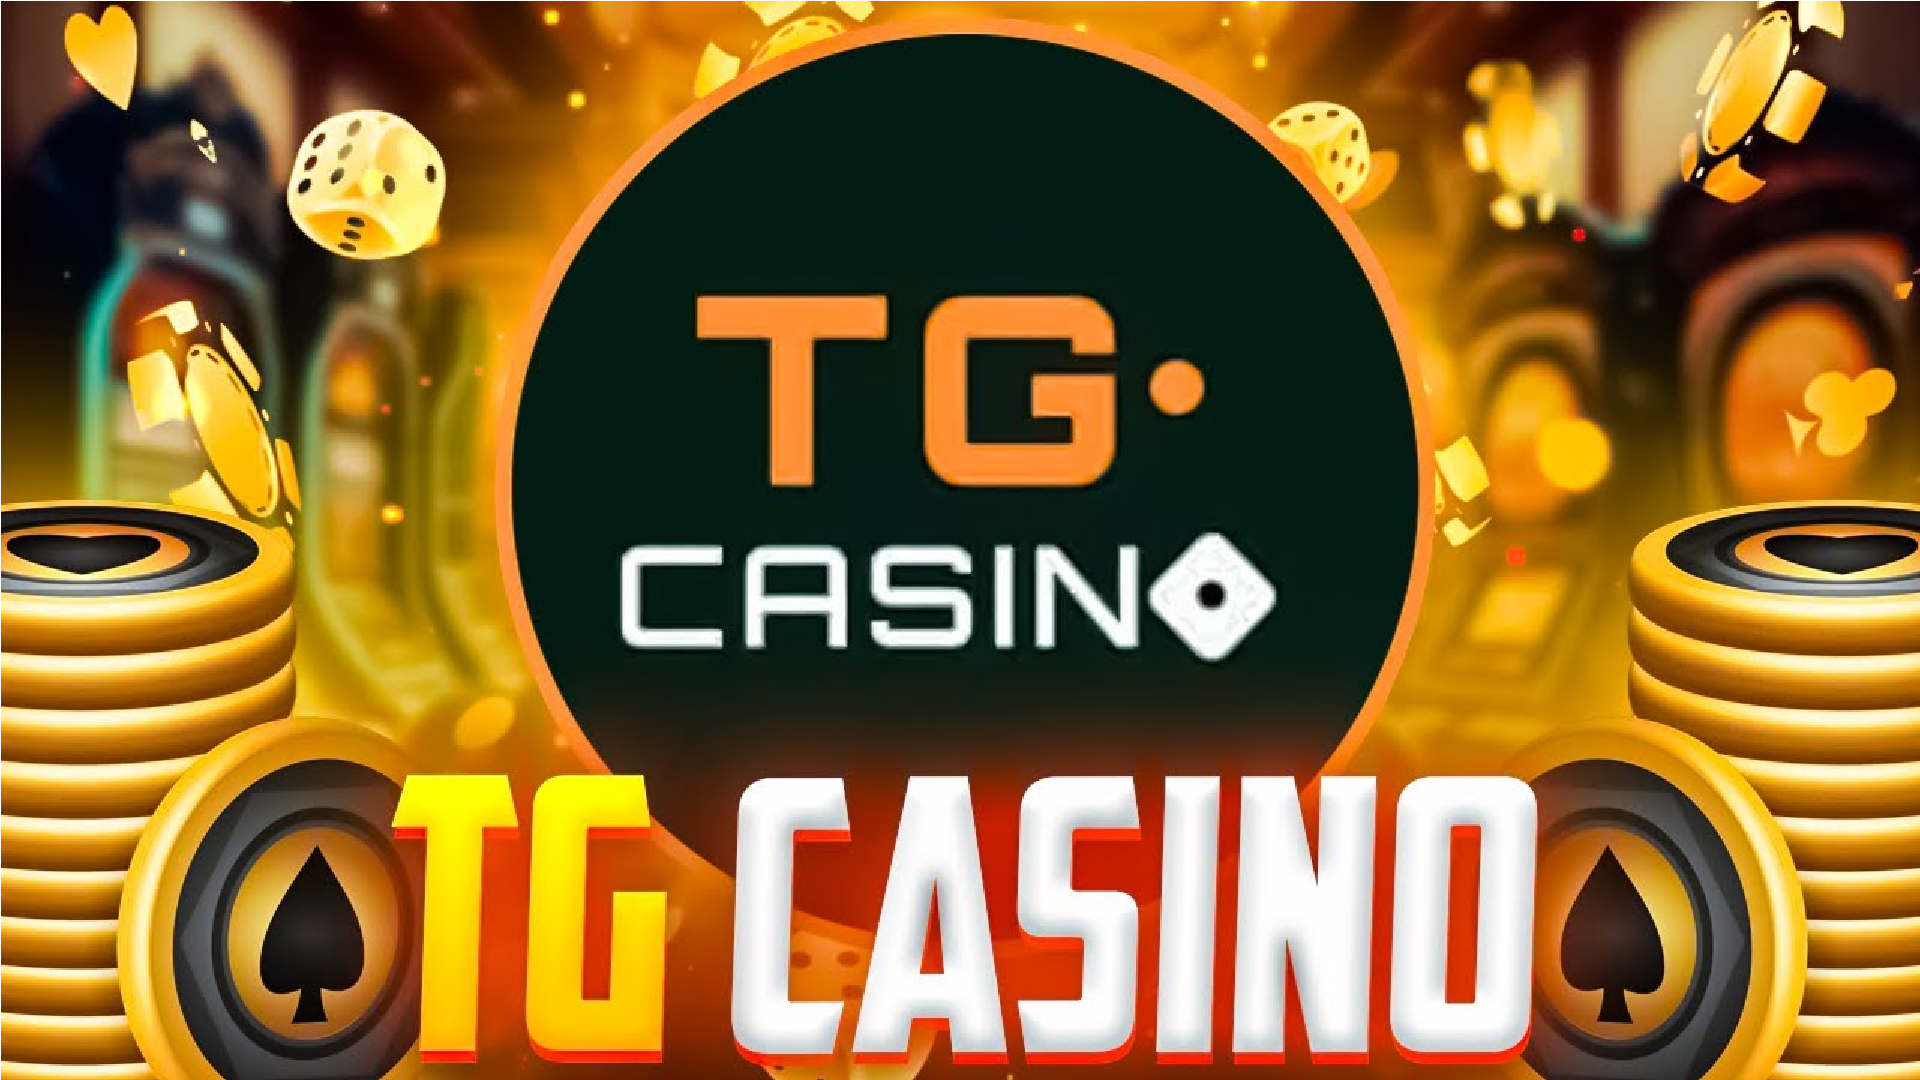 Top-Ranked Telegram Casino in 2023 Launches Token Presale - TG.Casino